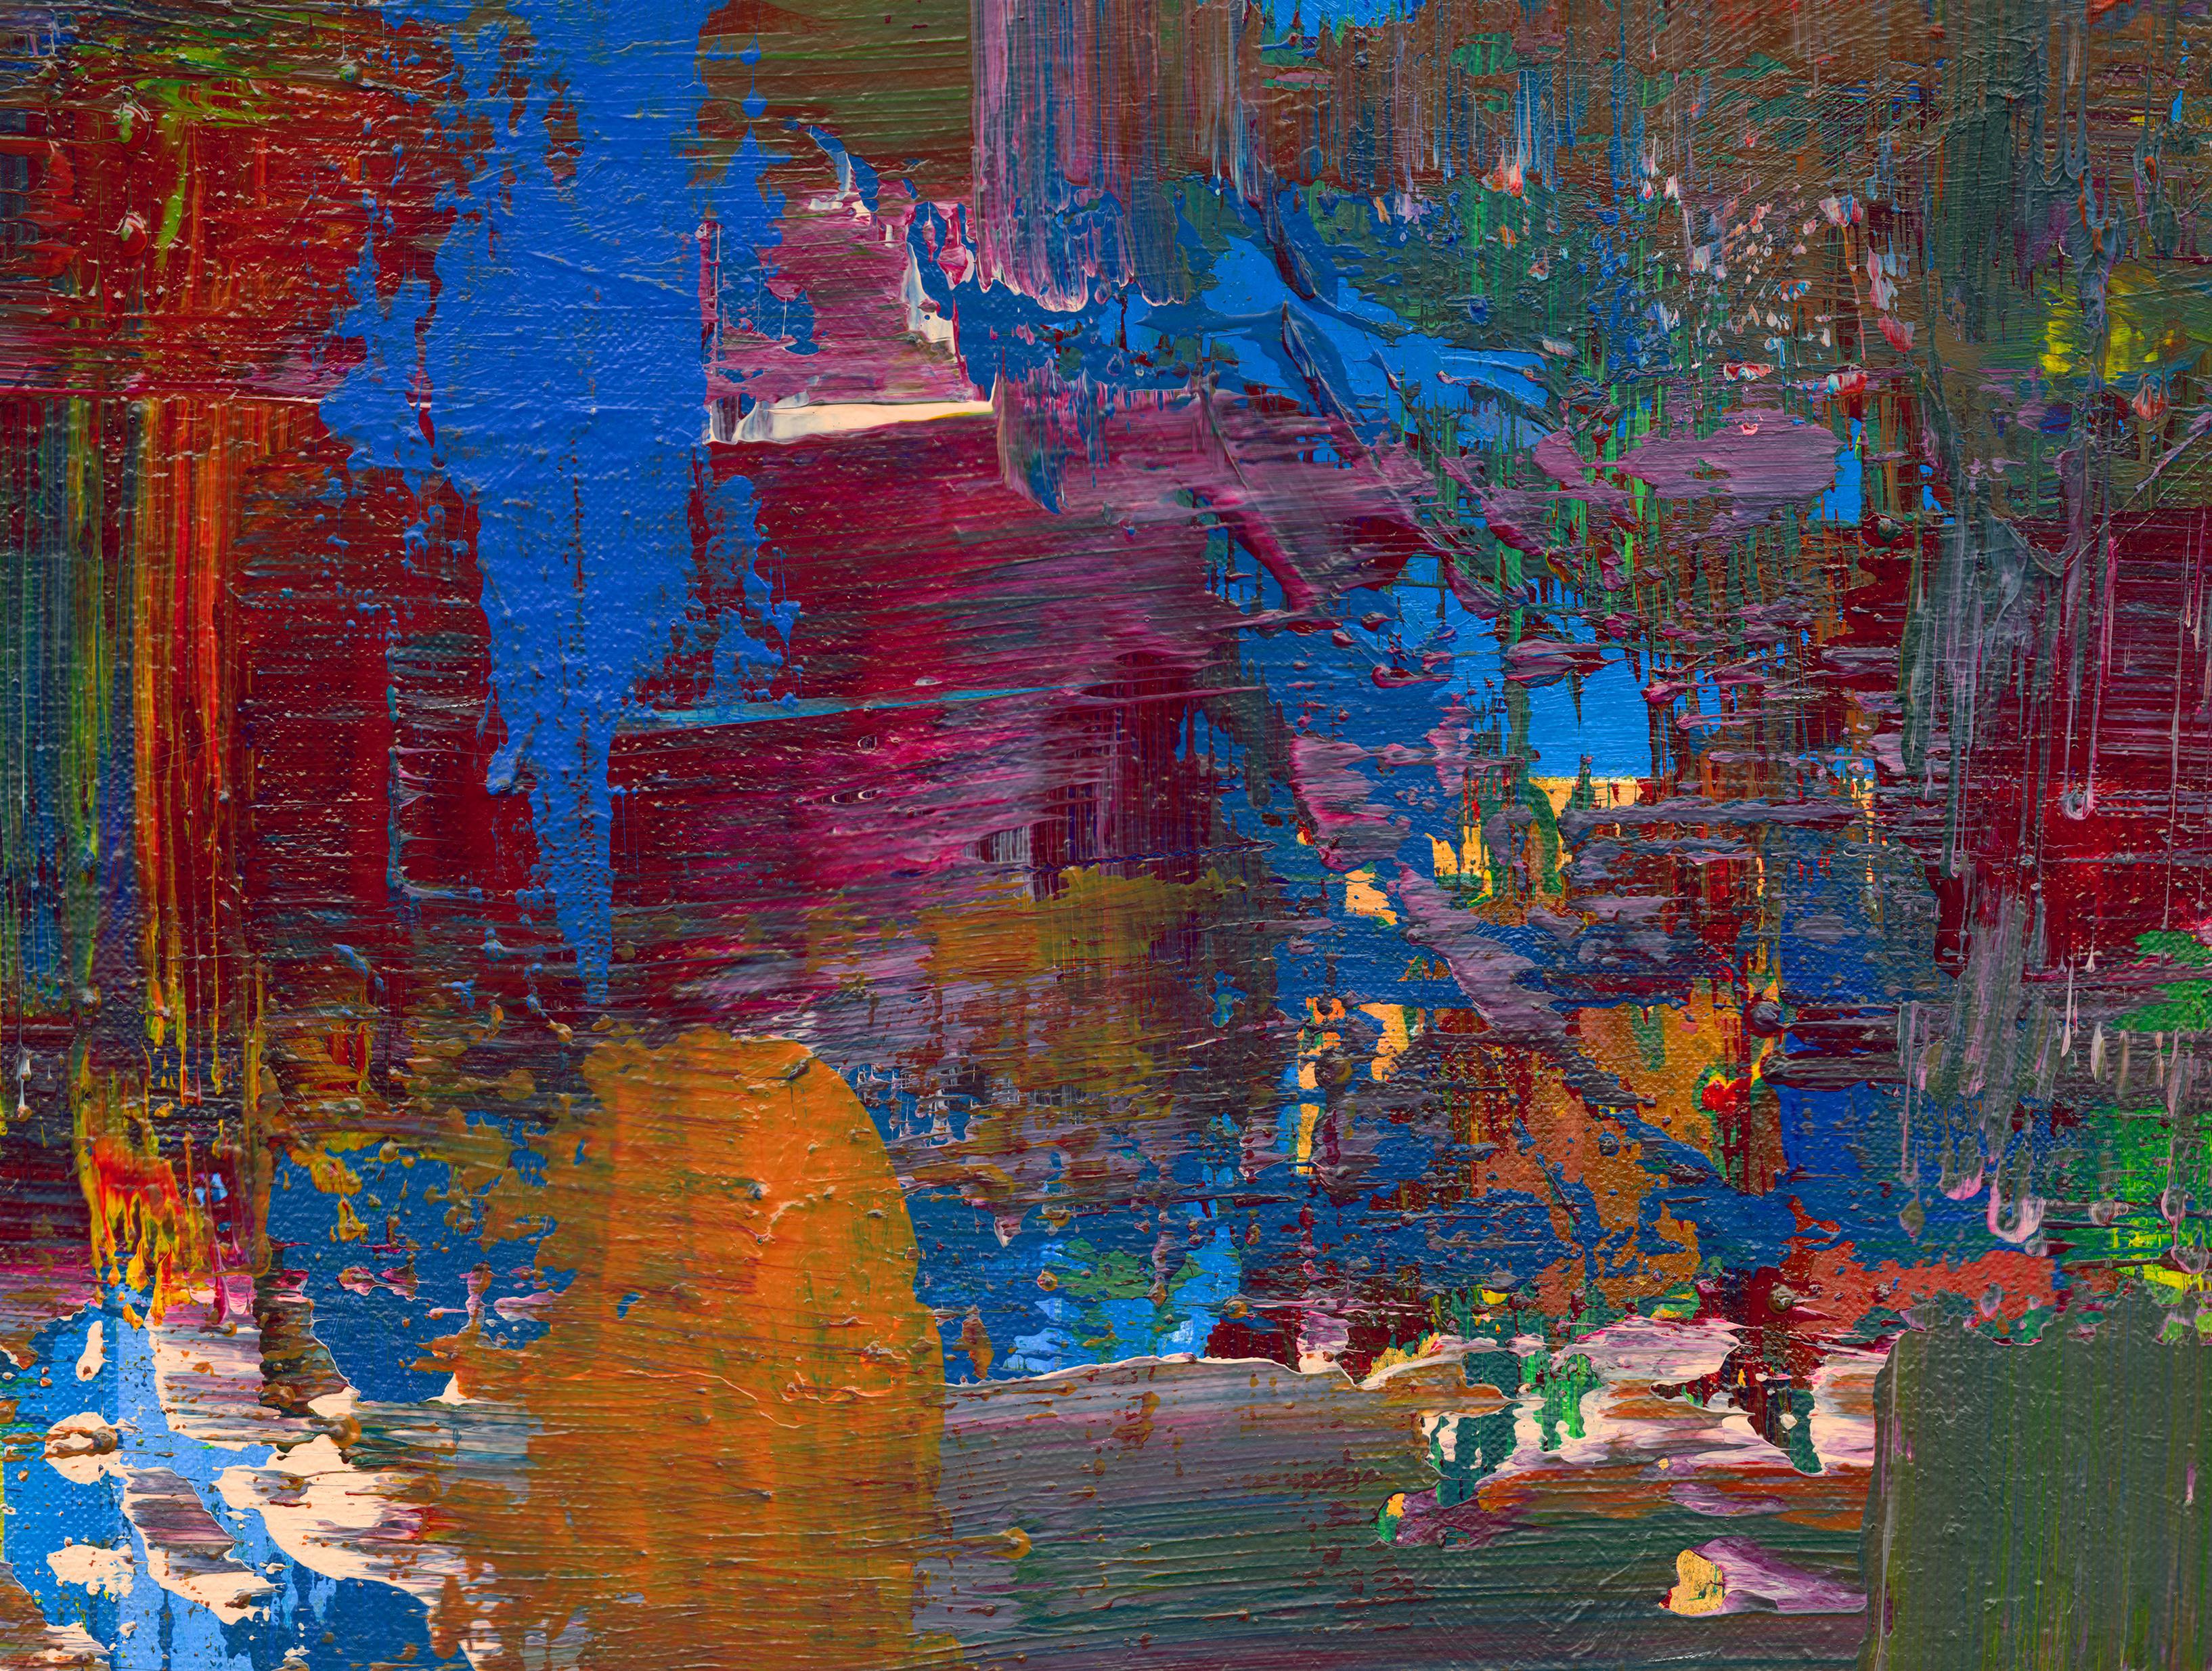 Splish Splash, Original Contemporary Colorful Blue Abstract Painting
34